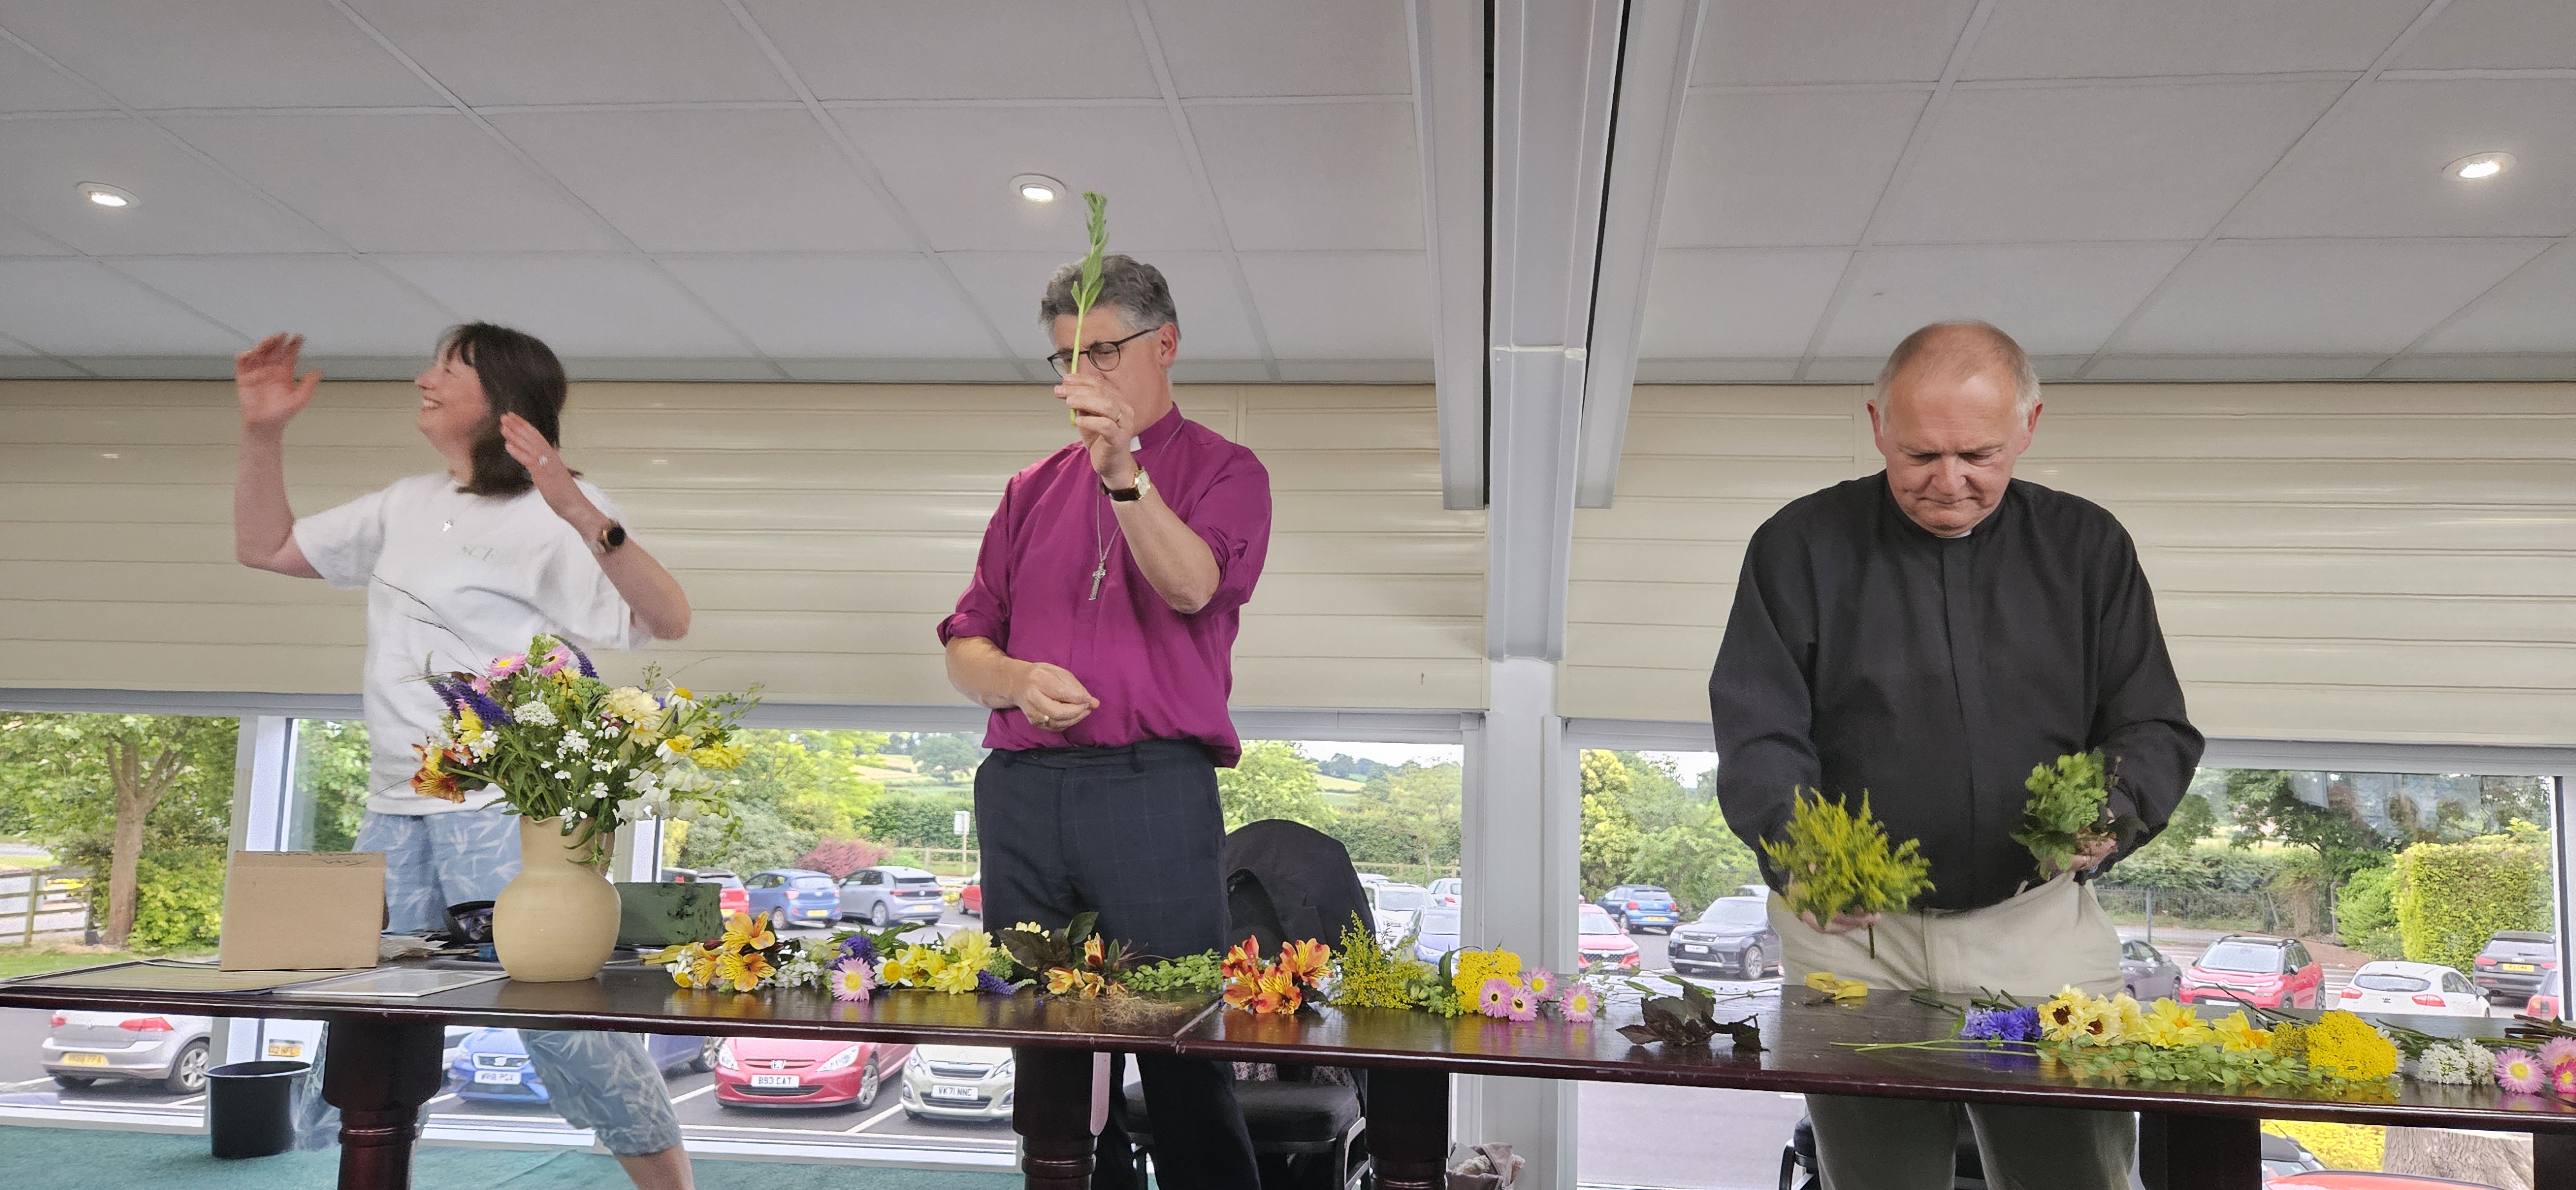 Bishop Martin & Tim Williams being helped  in sustainable flower arranging